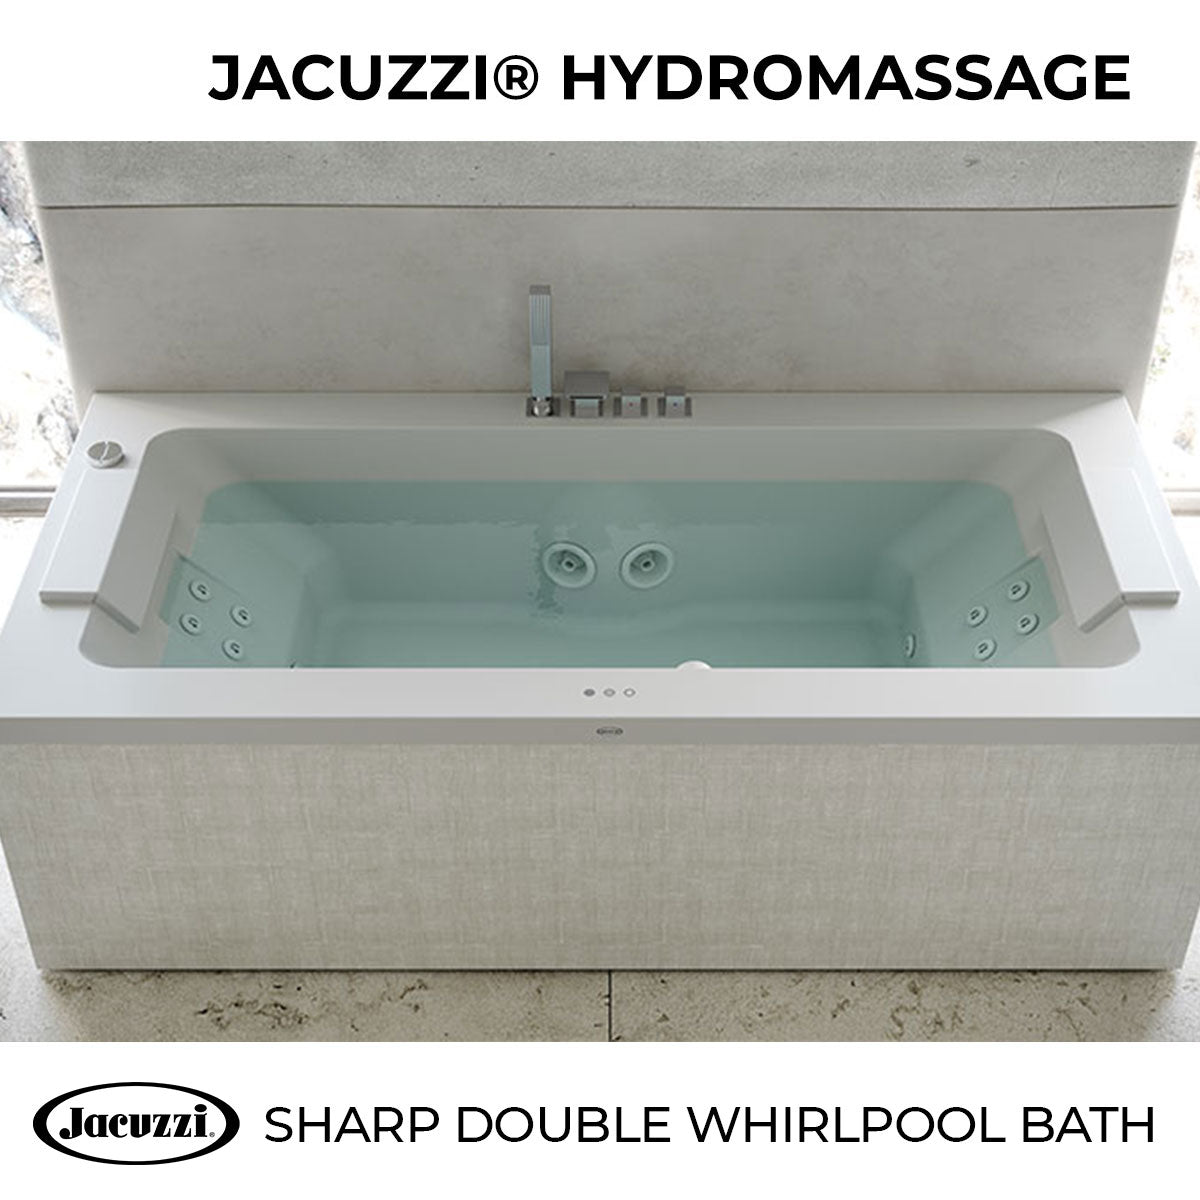 Jacuzzi® Sharp Double Whirlpool Bath With Full Body Hydromassage